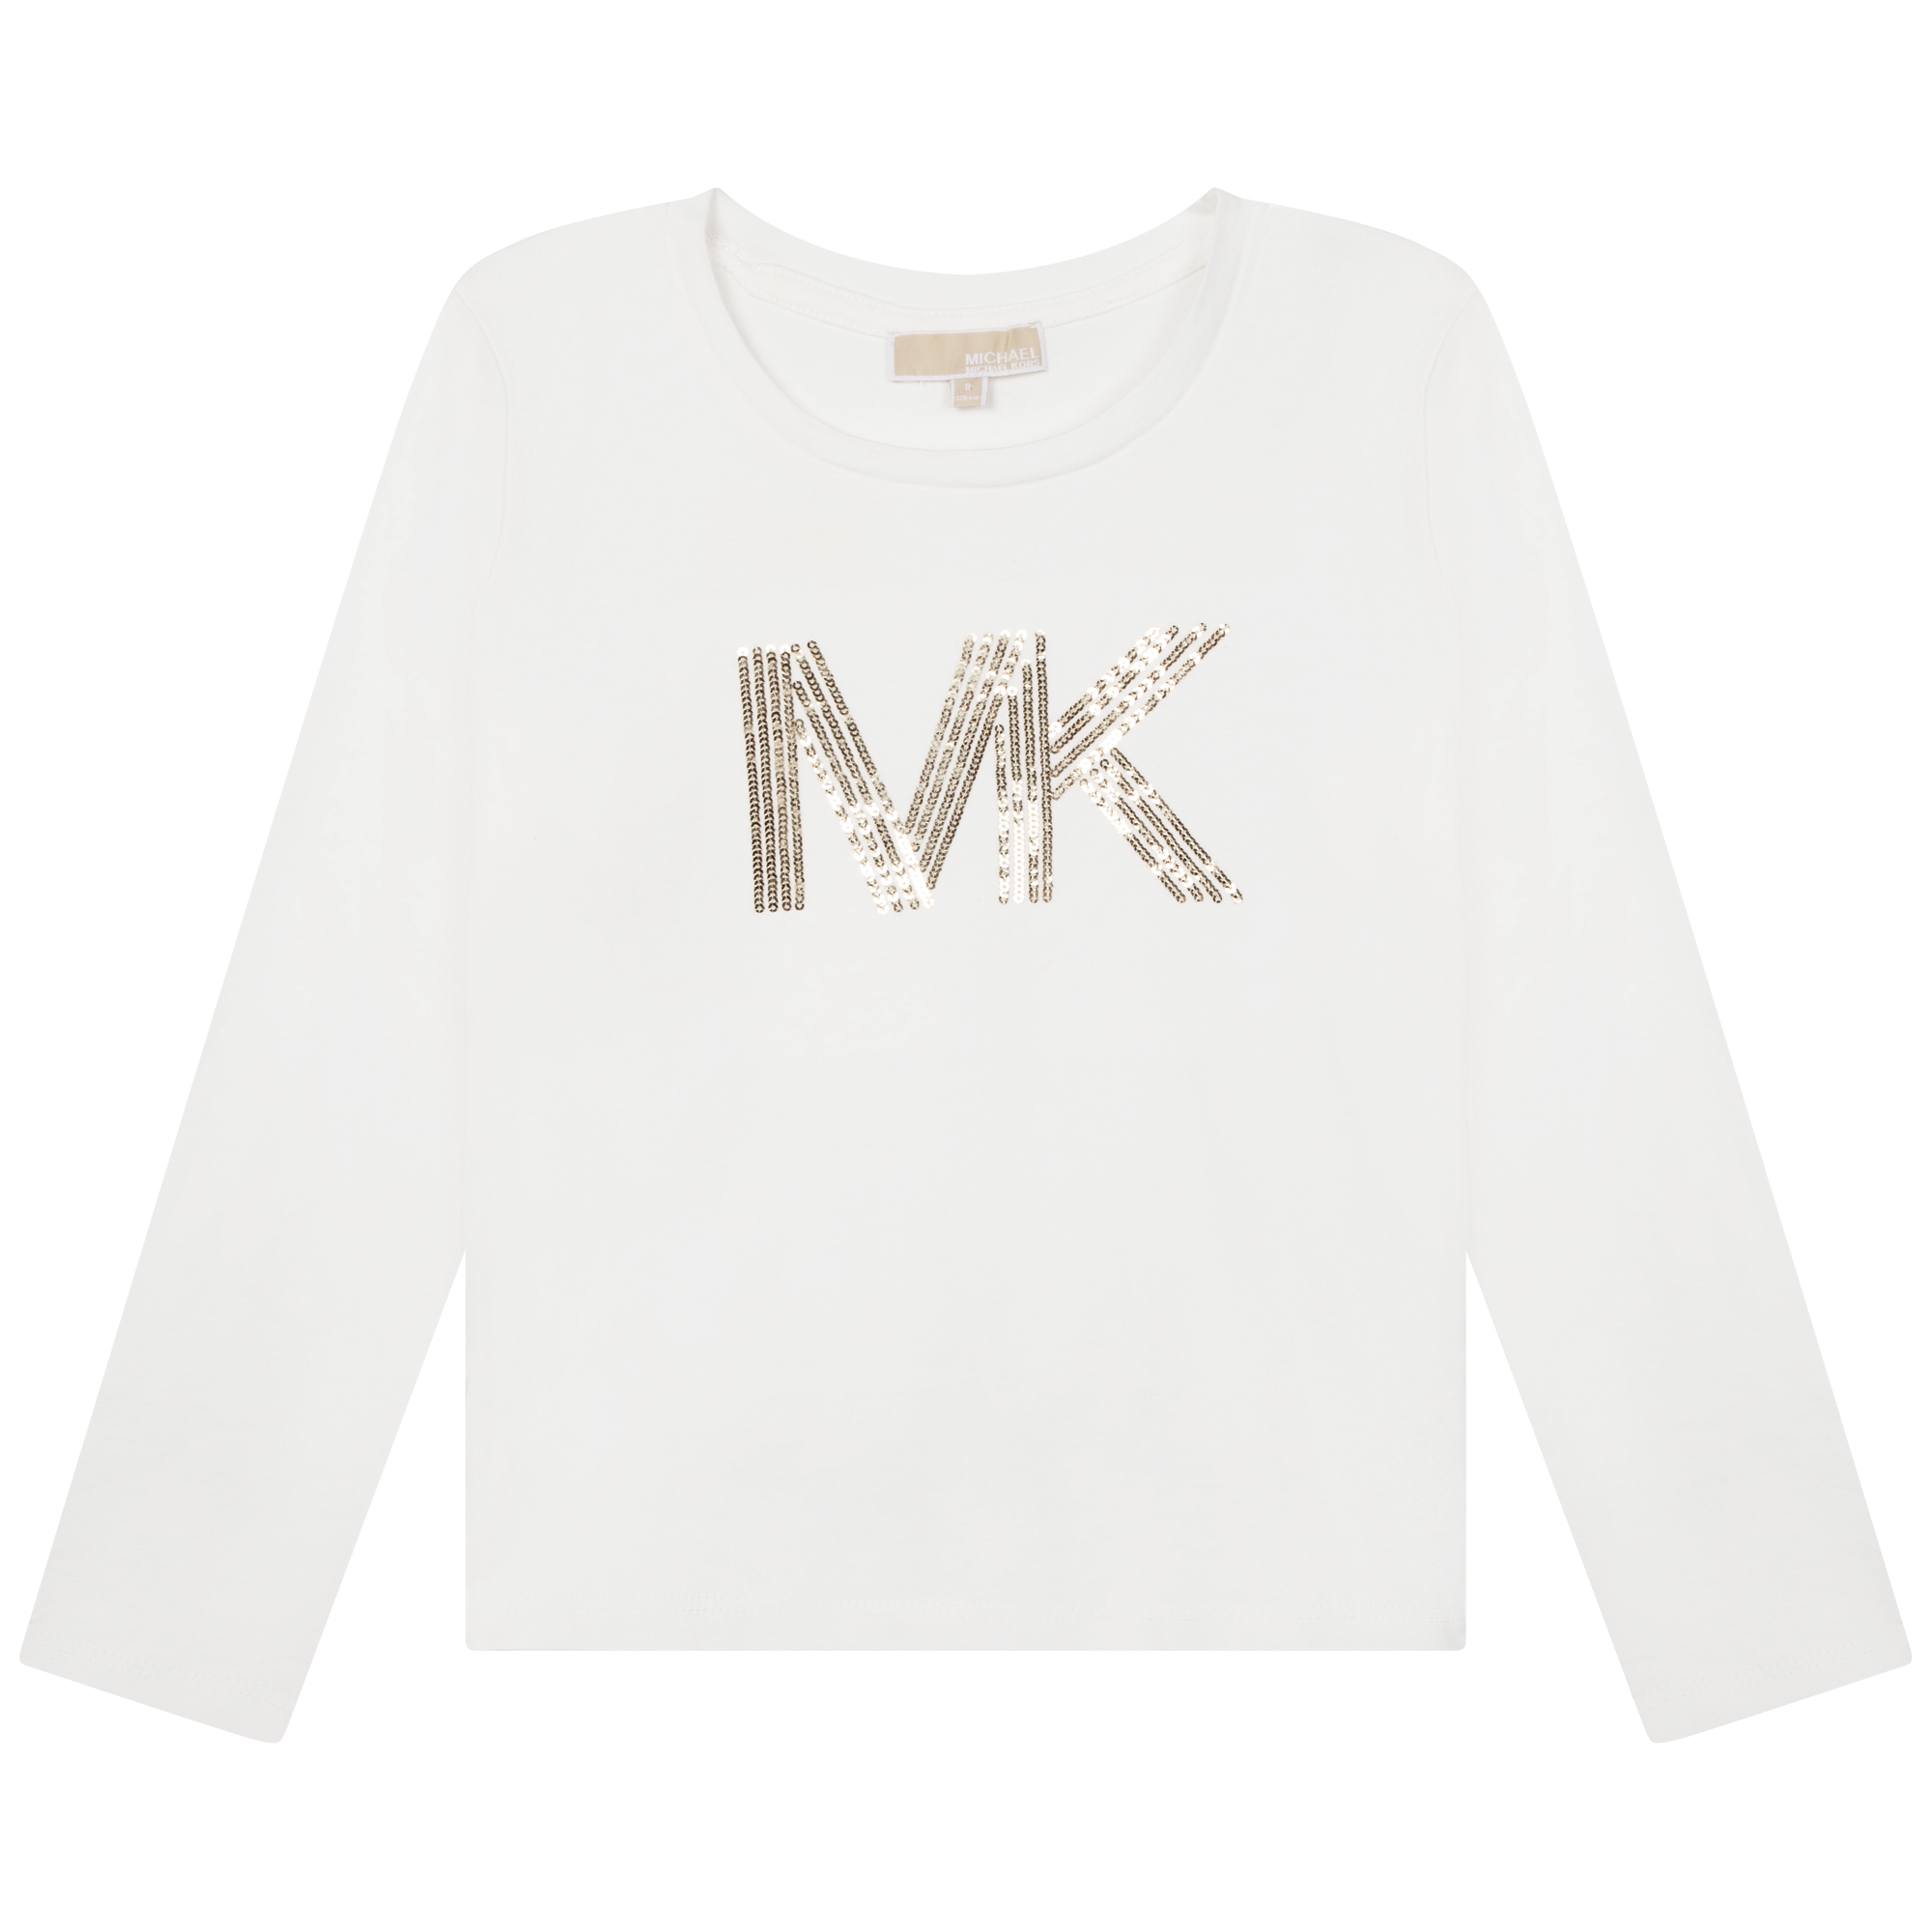 Camiseta algodón y lentejuelas MICHAEL KORS para NIÑA